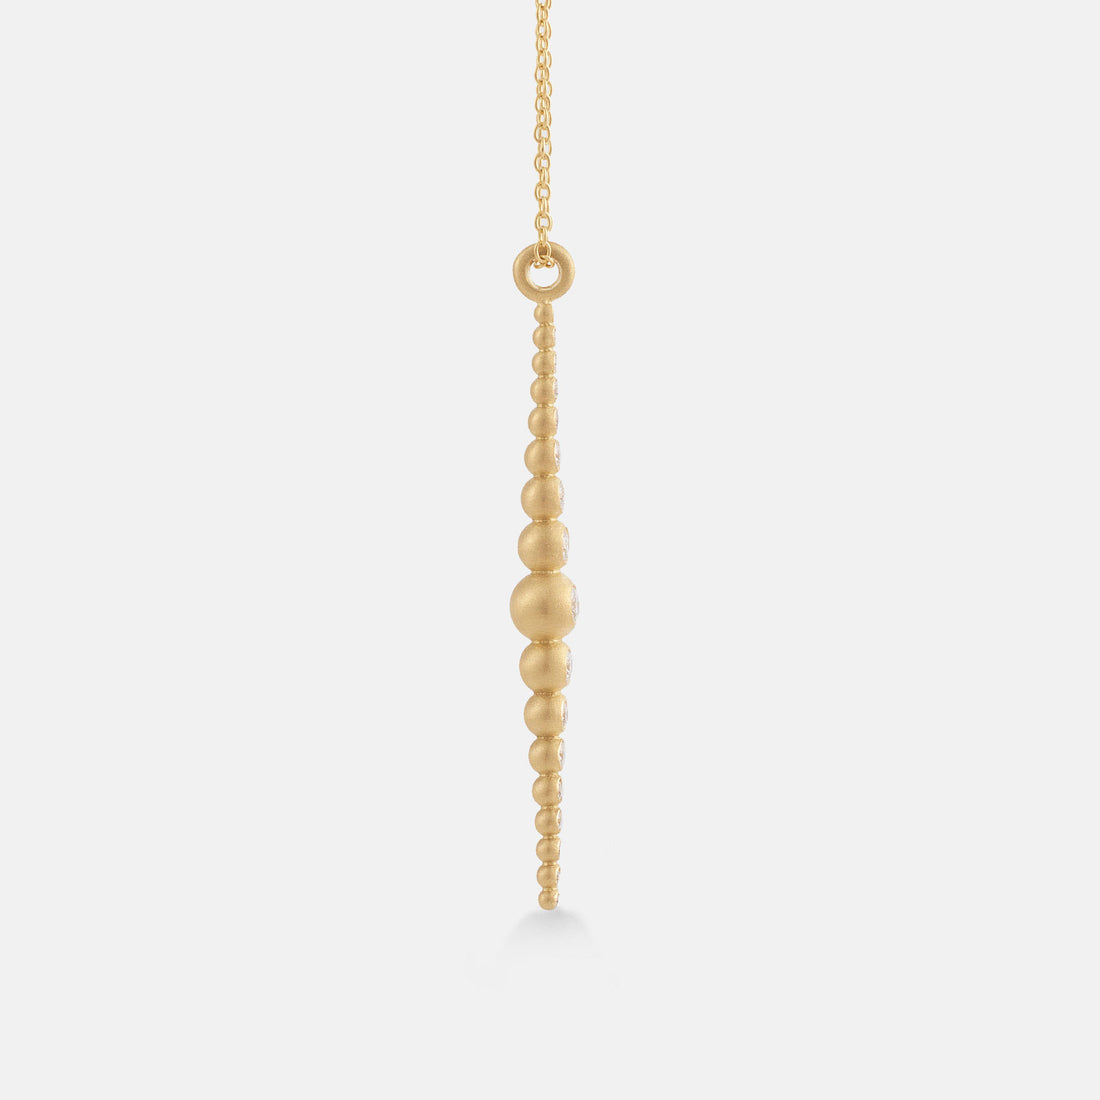 Stick necklace with graduated diamond set beads